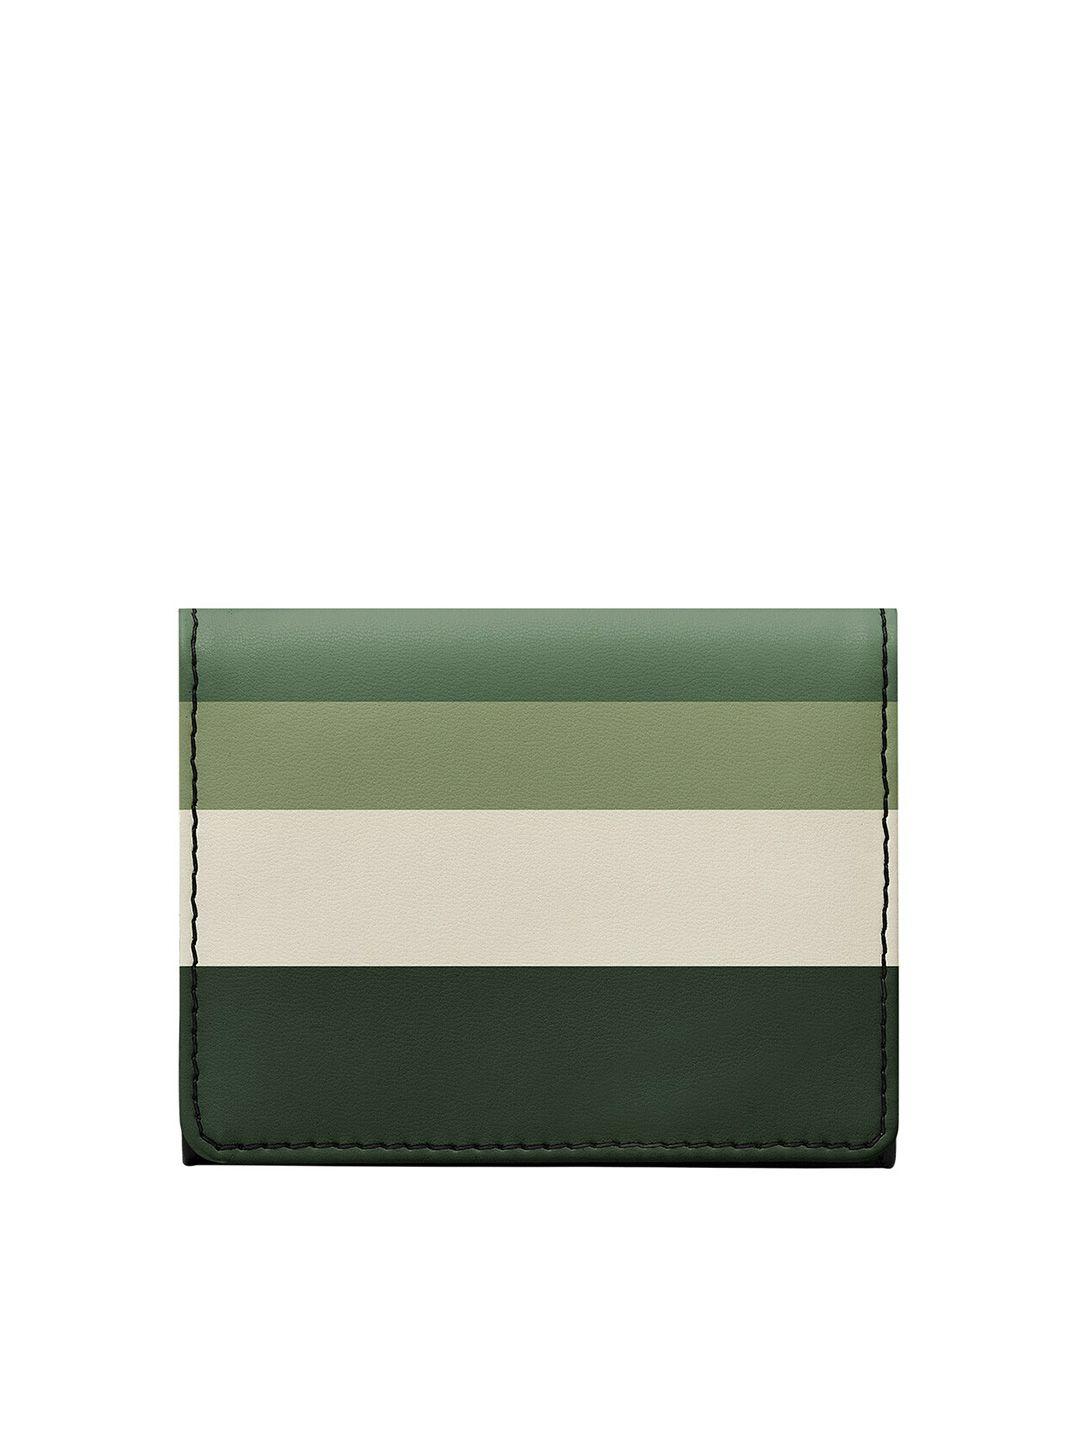 dailyobjects unisex green & white striped pu three fold wallet